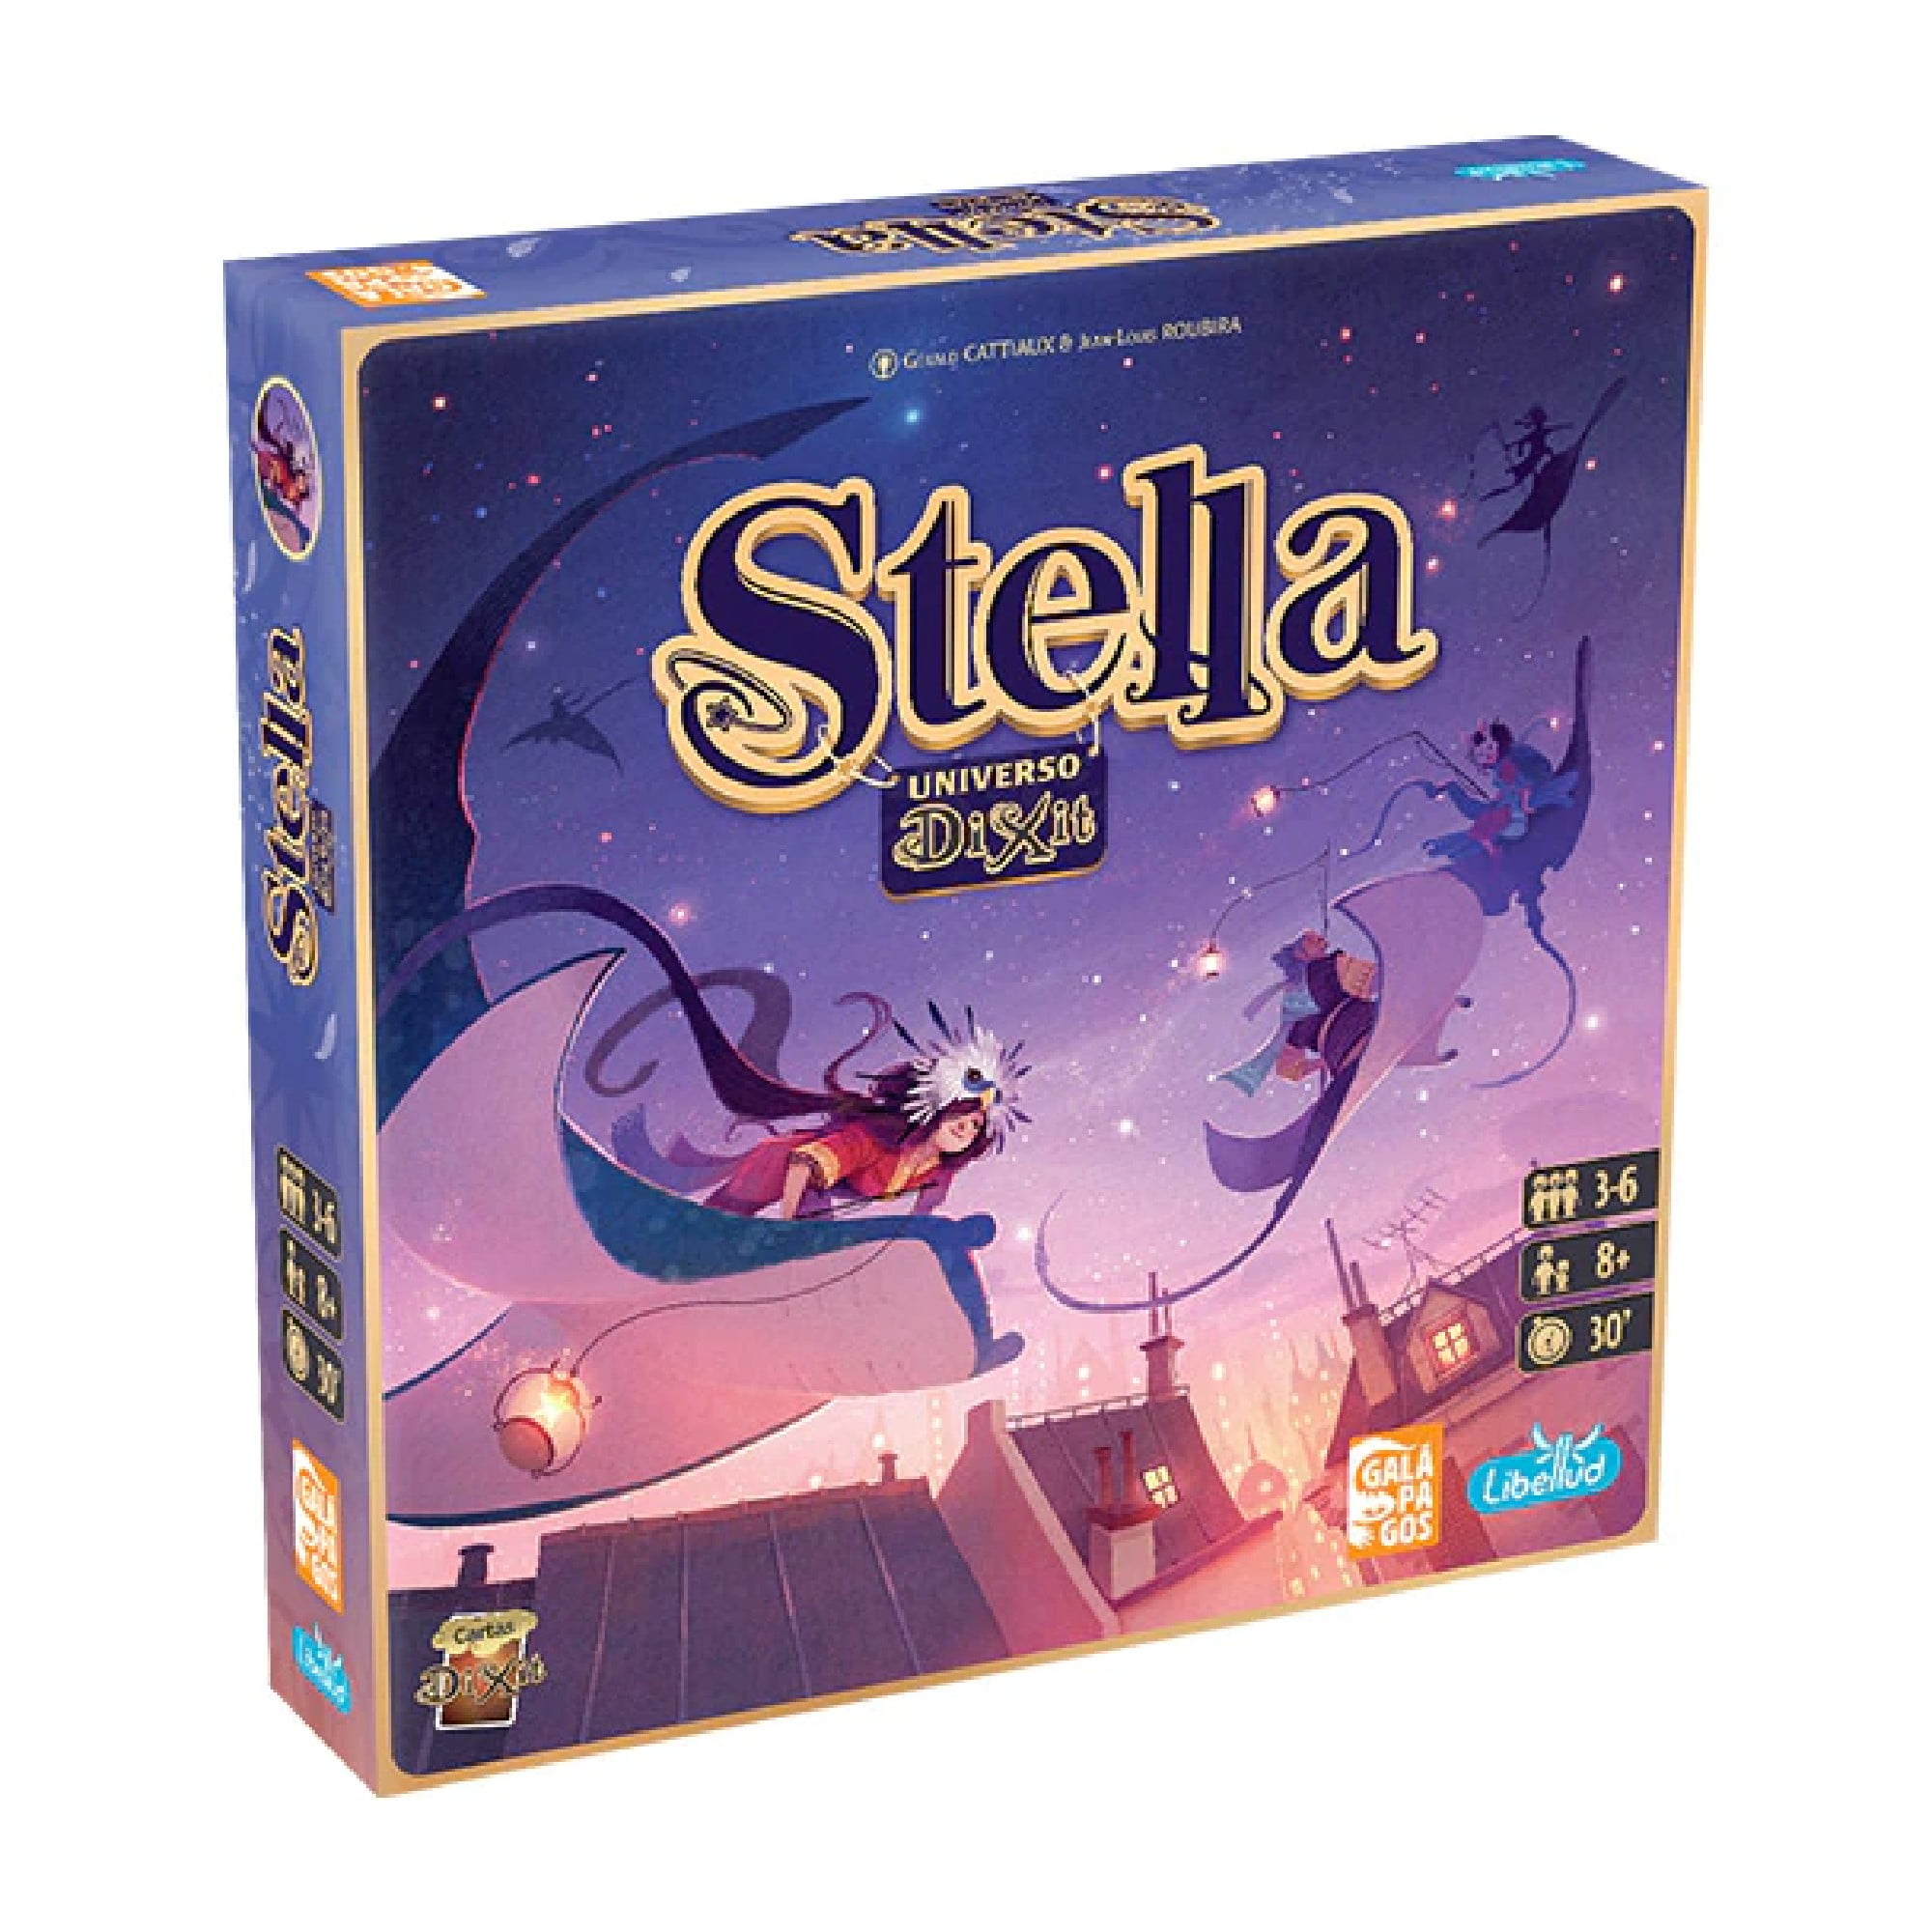 Jogo Stella - Universo Dixit